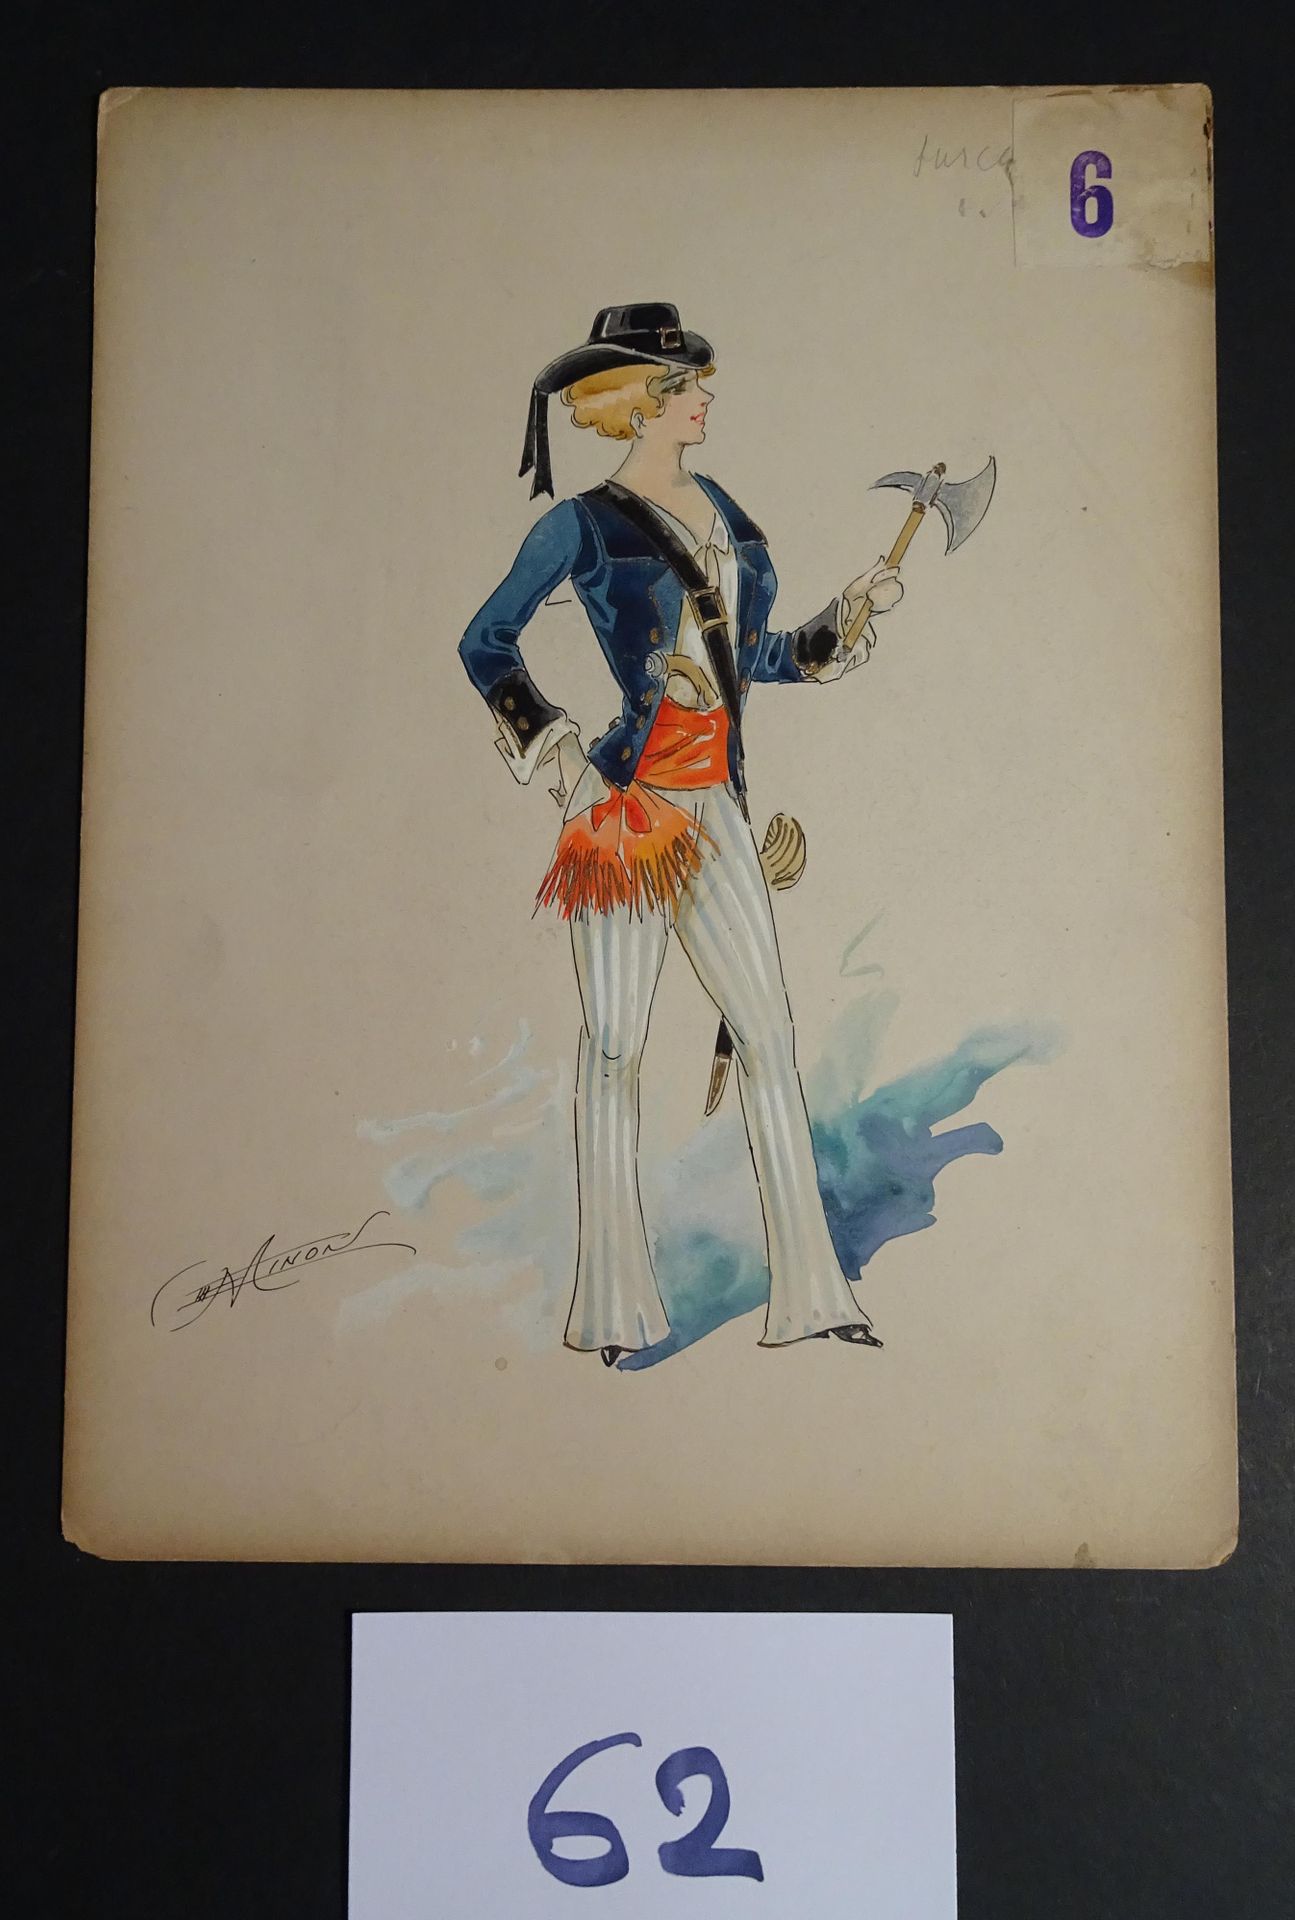 MINON 铭恩公司

"Surcouff" 约1880年。为一本杂志制作的服装模型。水彩水粉，印度墨水，已签名。32 x 25厘米。